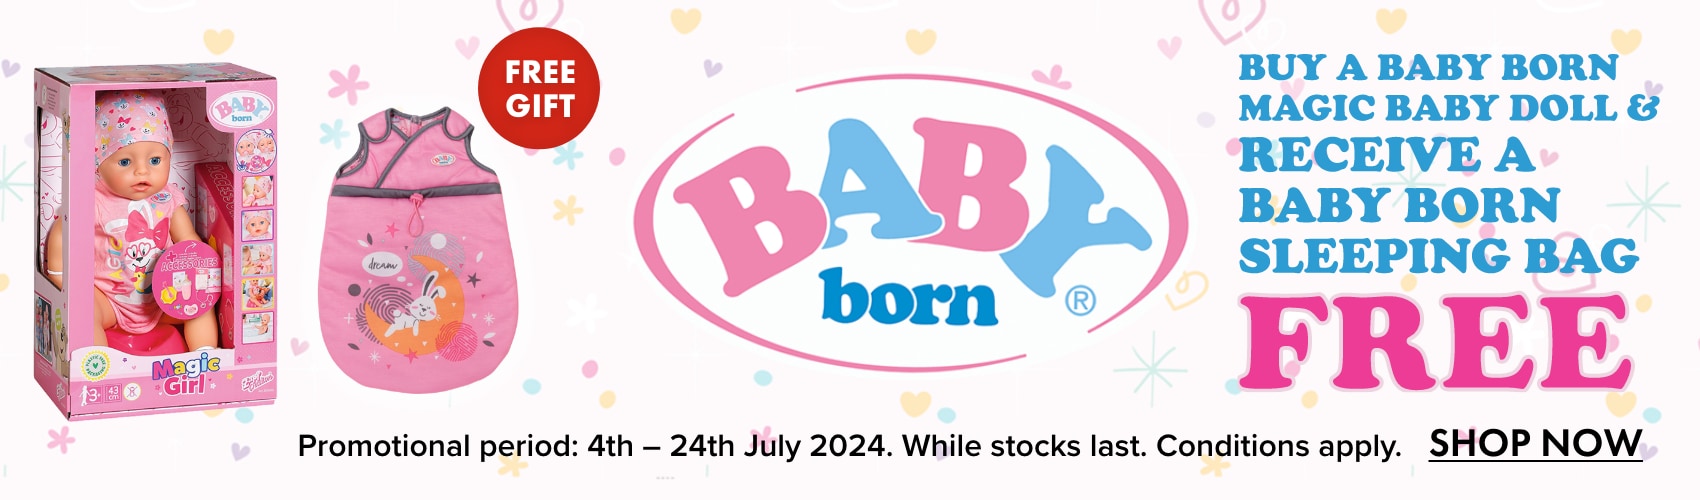 Baby Born GWP Banner